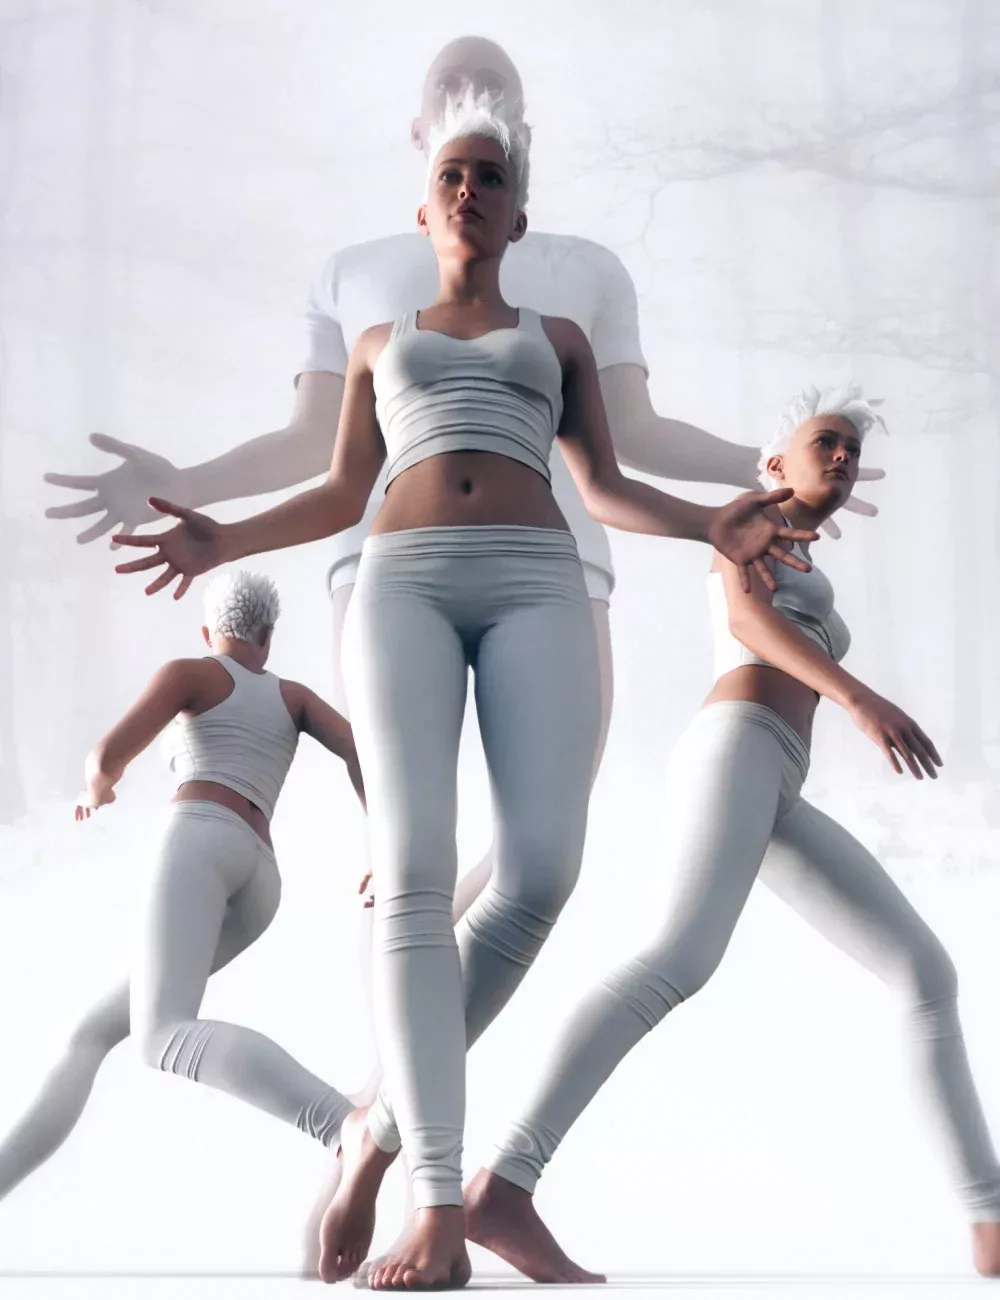 Z Curvy Confident Beauty Shape and Pose Mega Set for Genesis 9